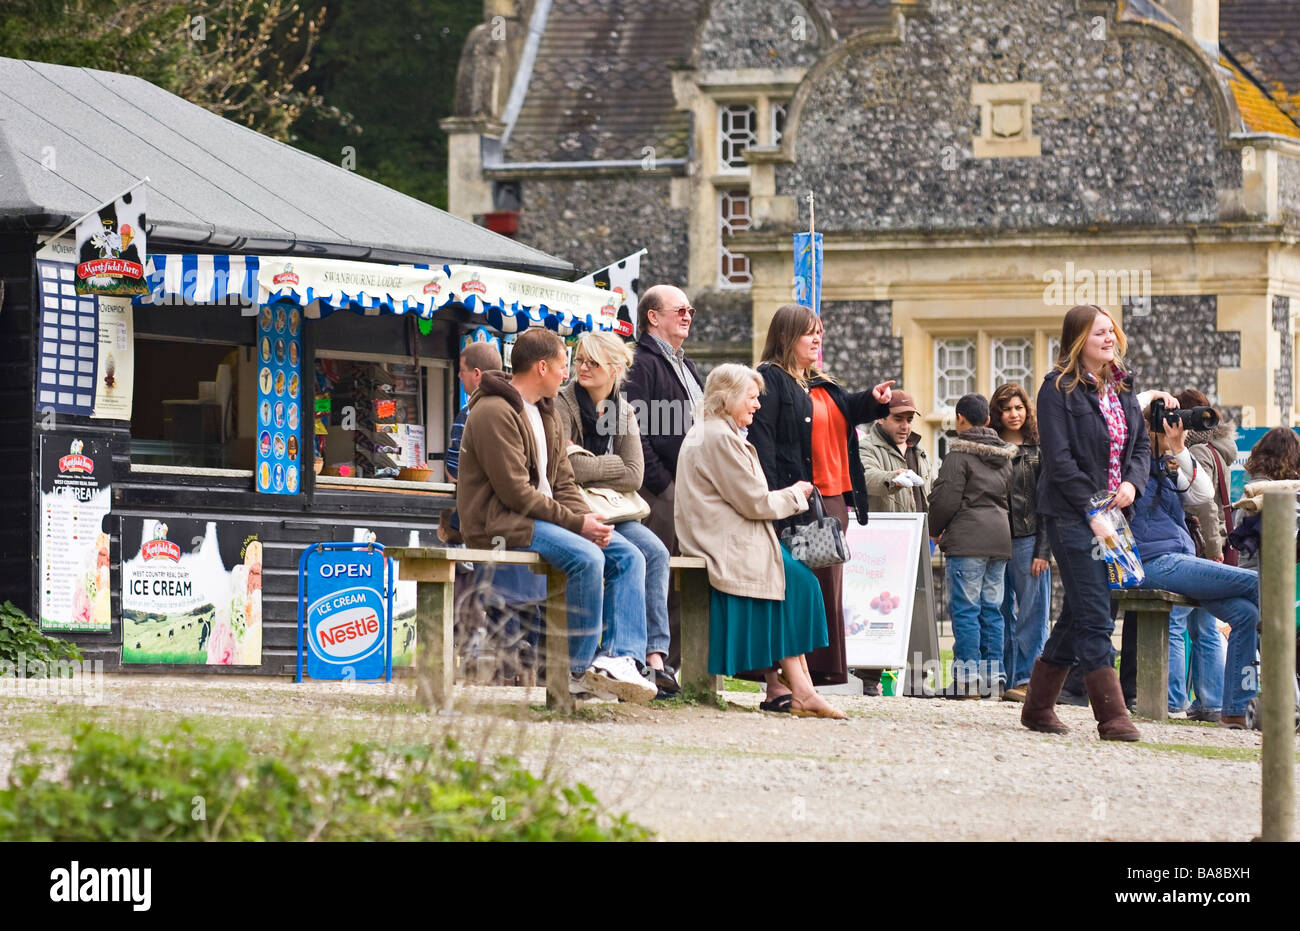 British people on holiday outside Ice cream kiosk in Arundel, West Sussex, UK Stock Photo